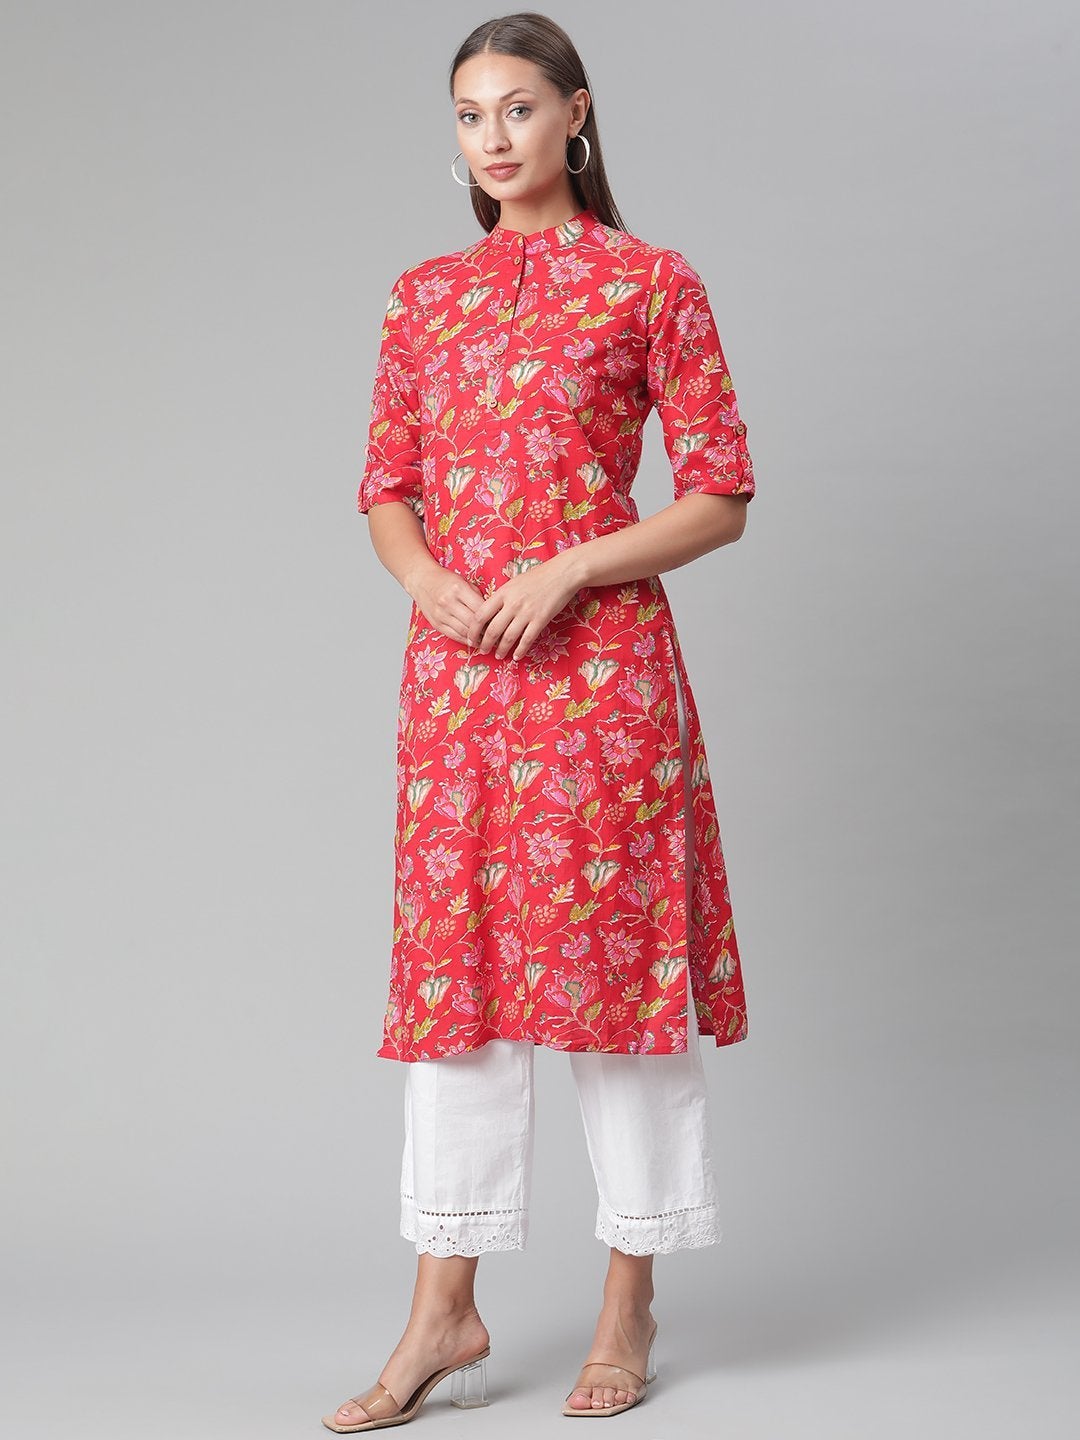 Women's Red Floral Print Cotton Straight Kurta - Divena